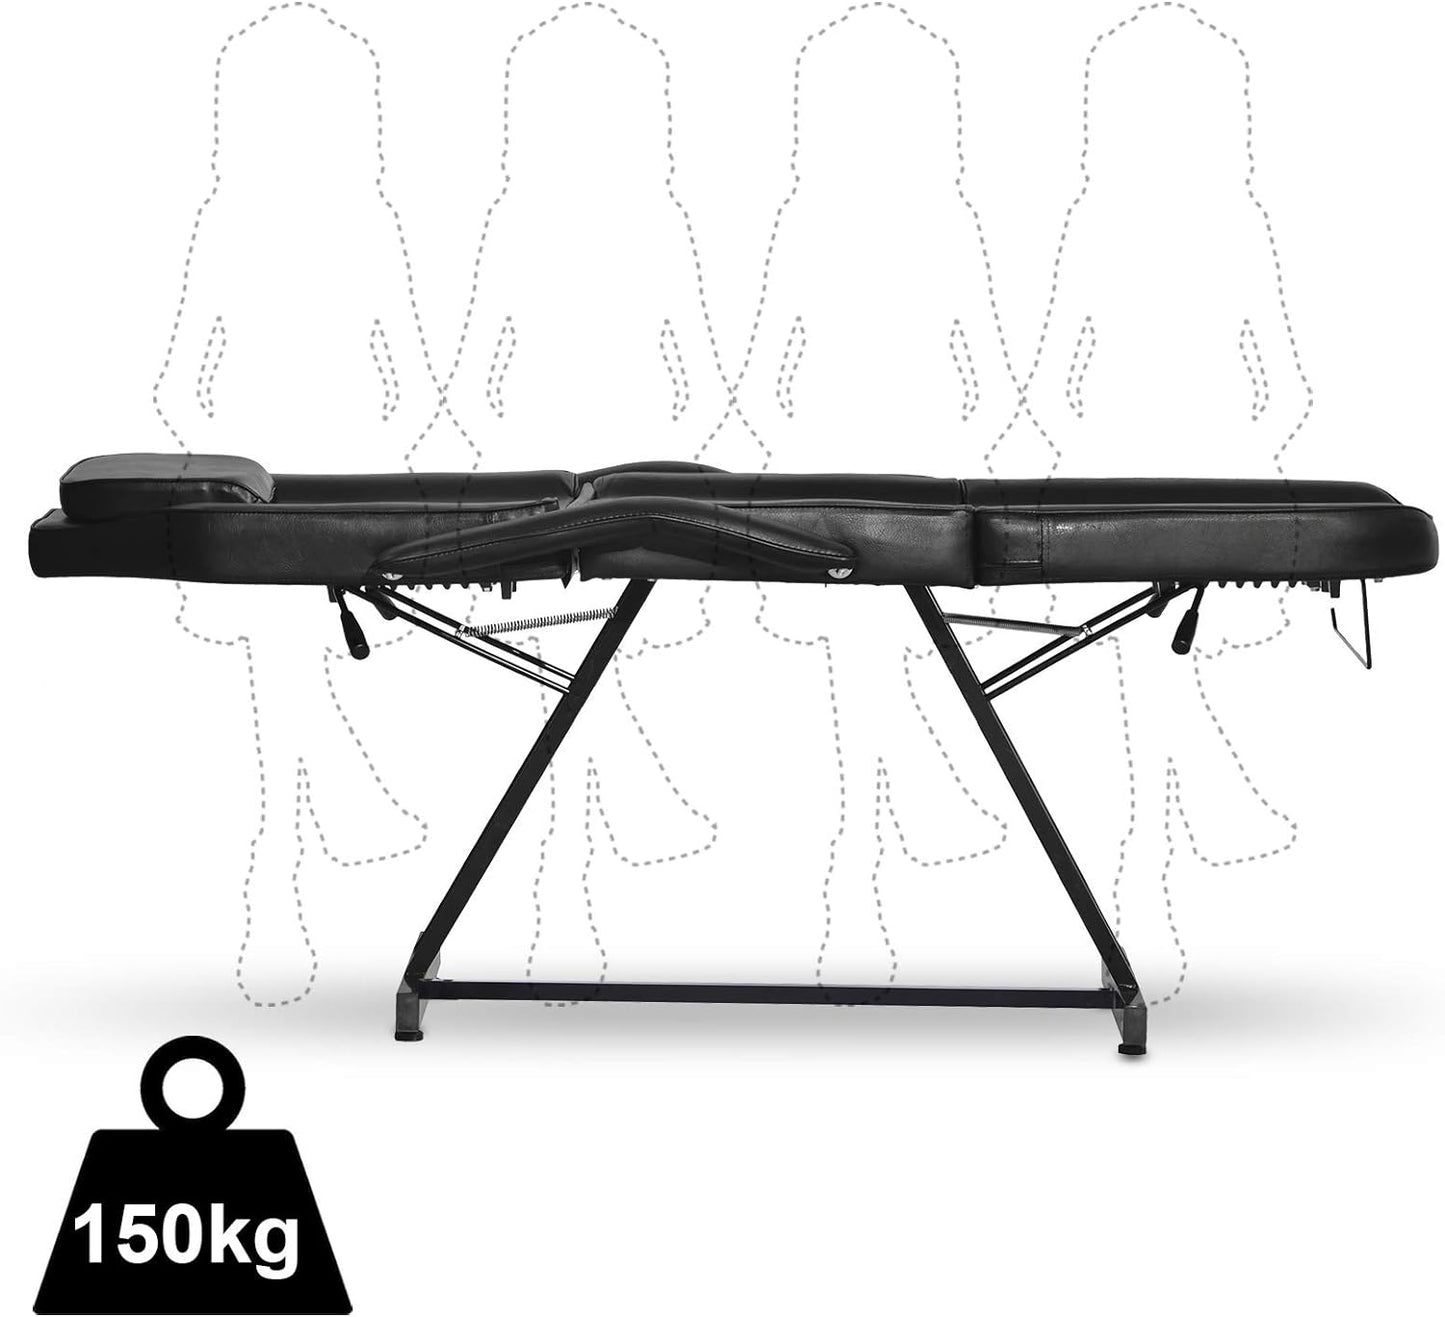 Adjustable Tattoo & Massage Table/Bed | Welded Steel Base | Multi-Functional Unit